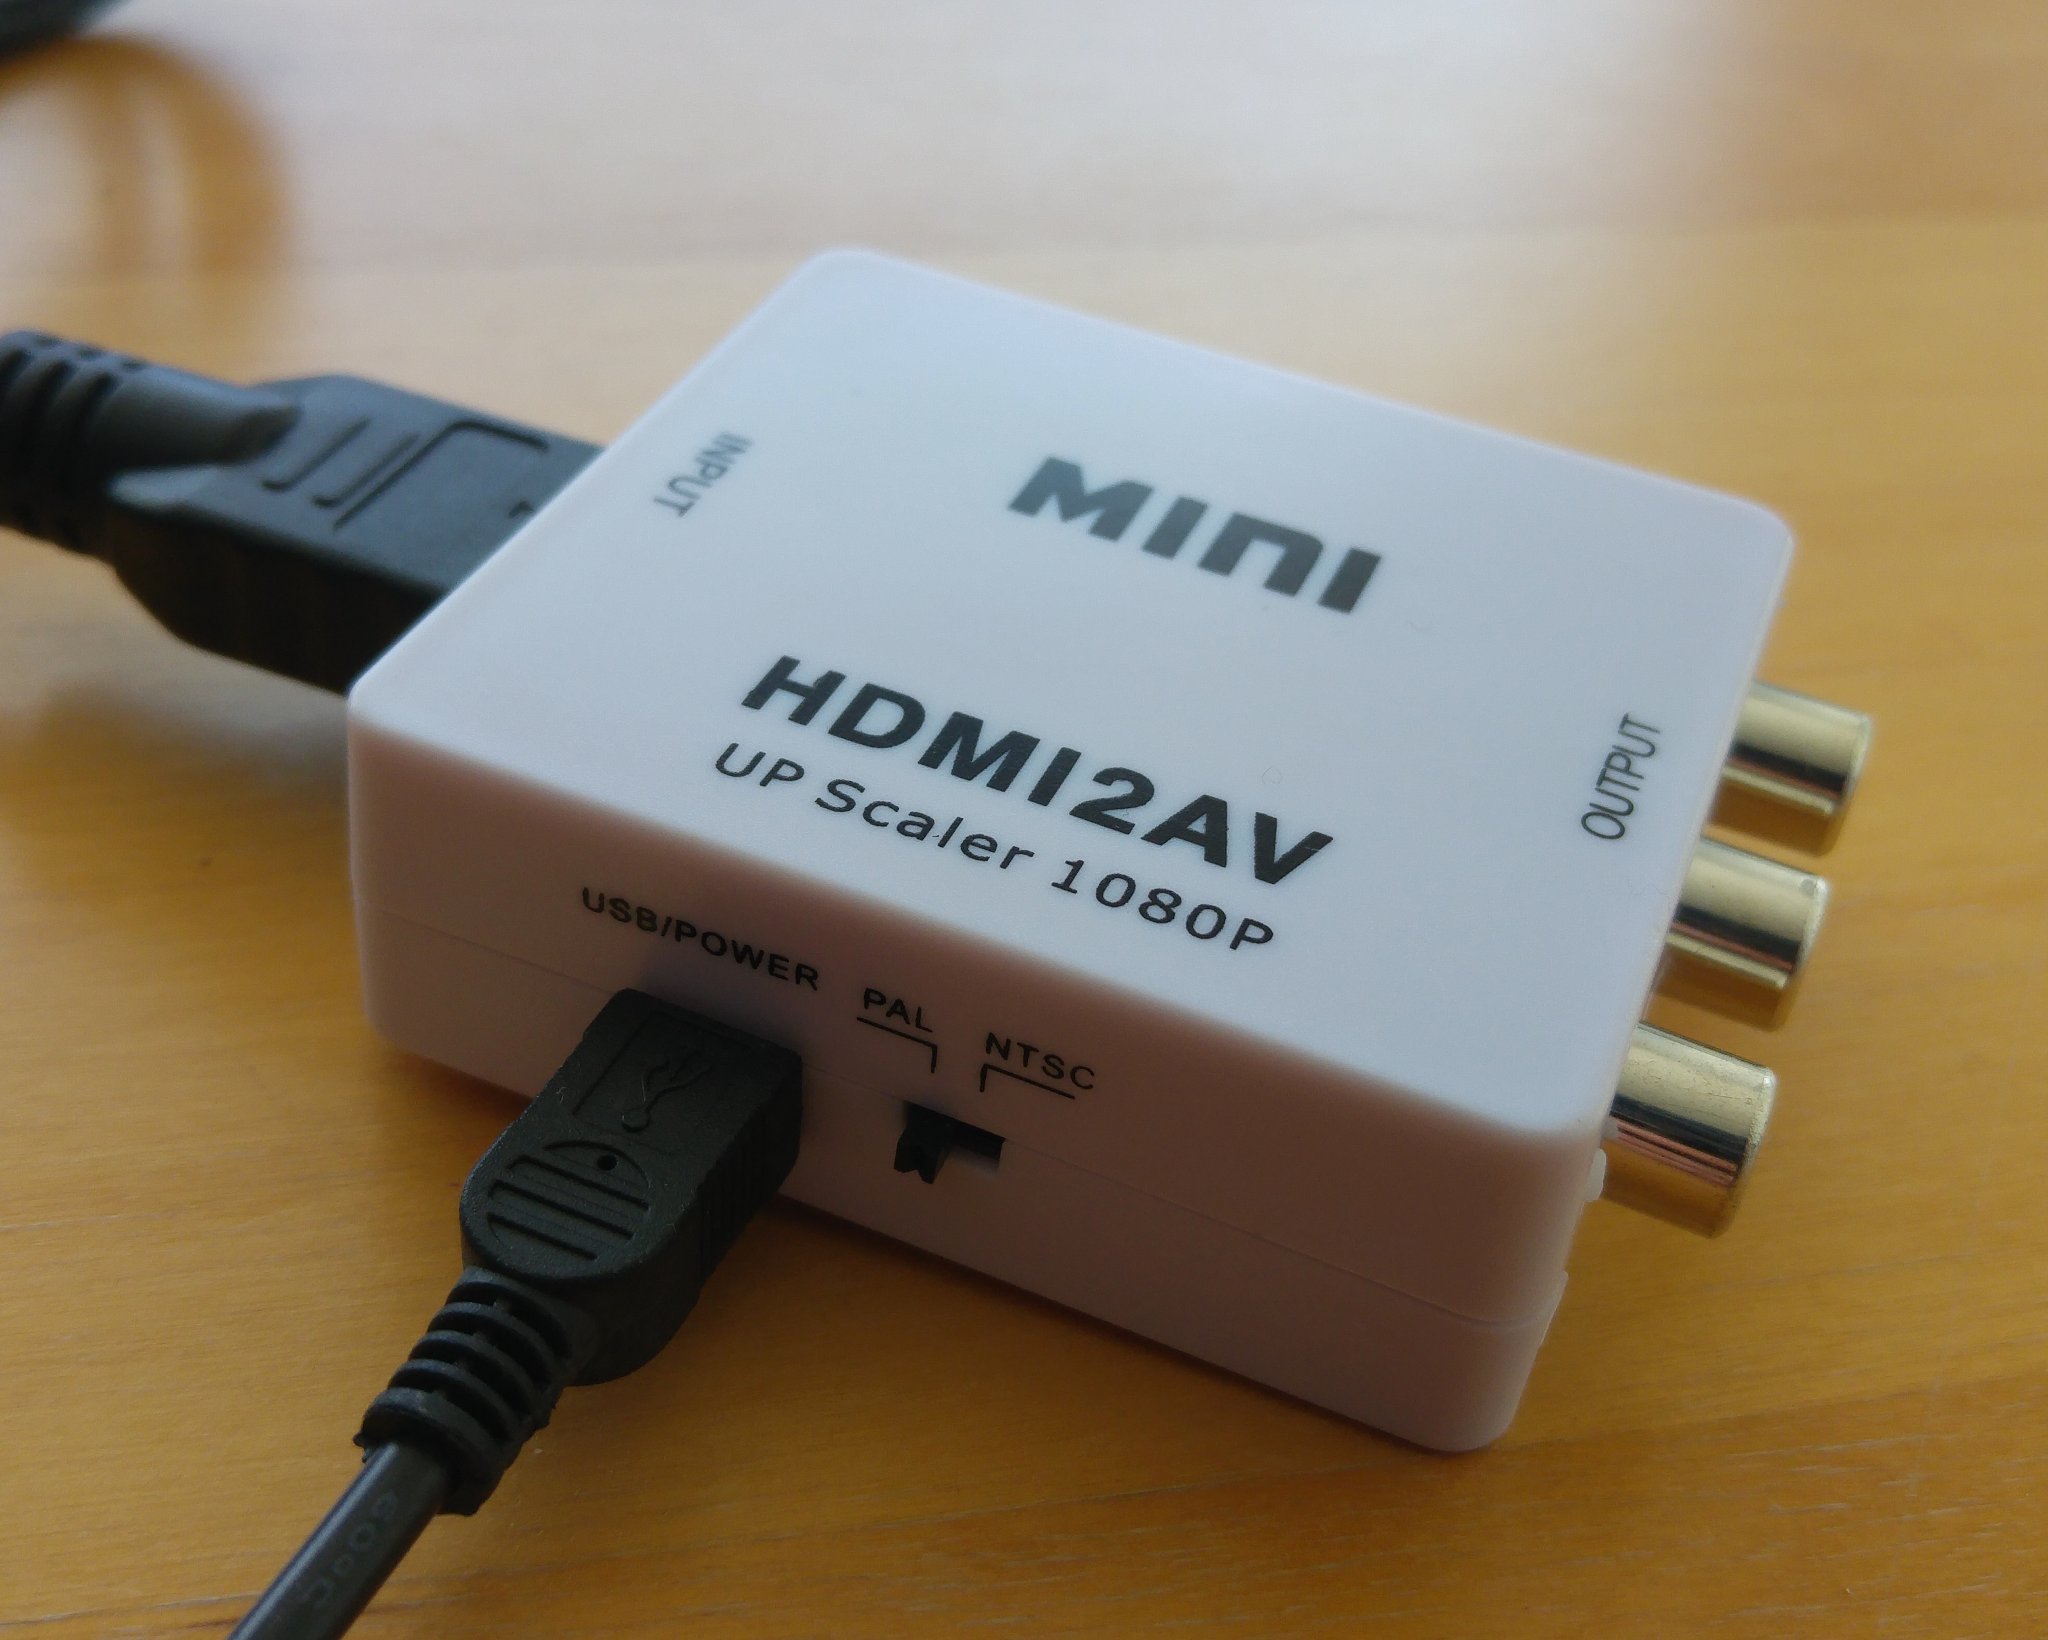 Convertisseur AV RCA à HDMI - 5 V